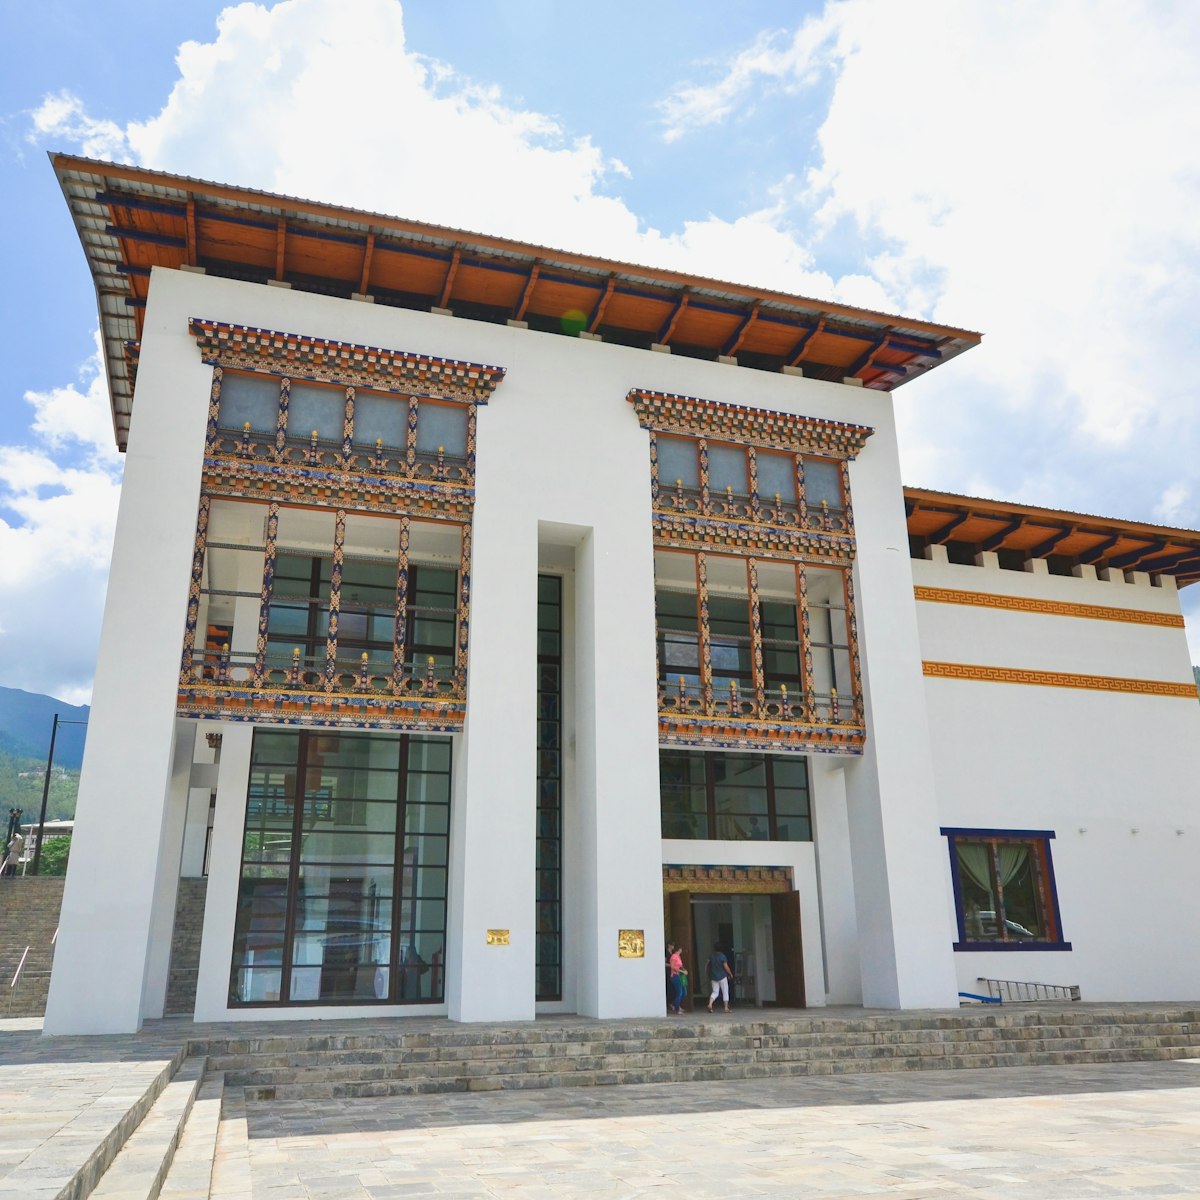 Thimphu, Bhutan - AUGUST 13, 2014: The National Textile Museum of Bhutan; Shutterstock ID 610666673; full: 65050; gl: 65050; netsuite: poi; your: Barbara Di Castro
610666673